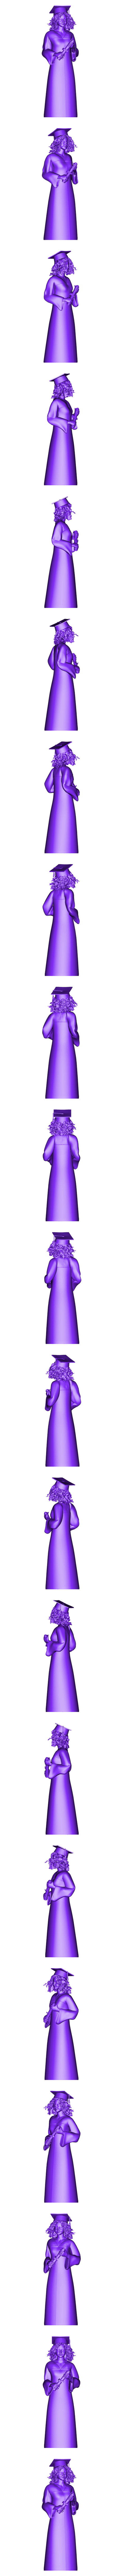 girls ready.obj Download OBJ file graduate • 3D printable template, RolandH